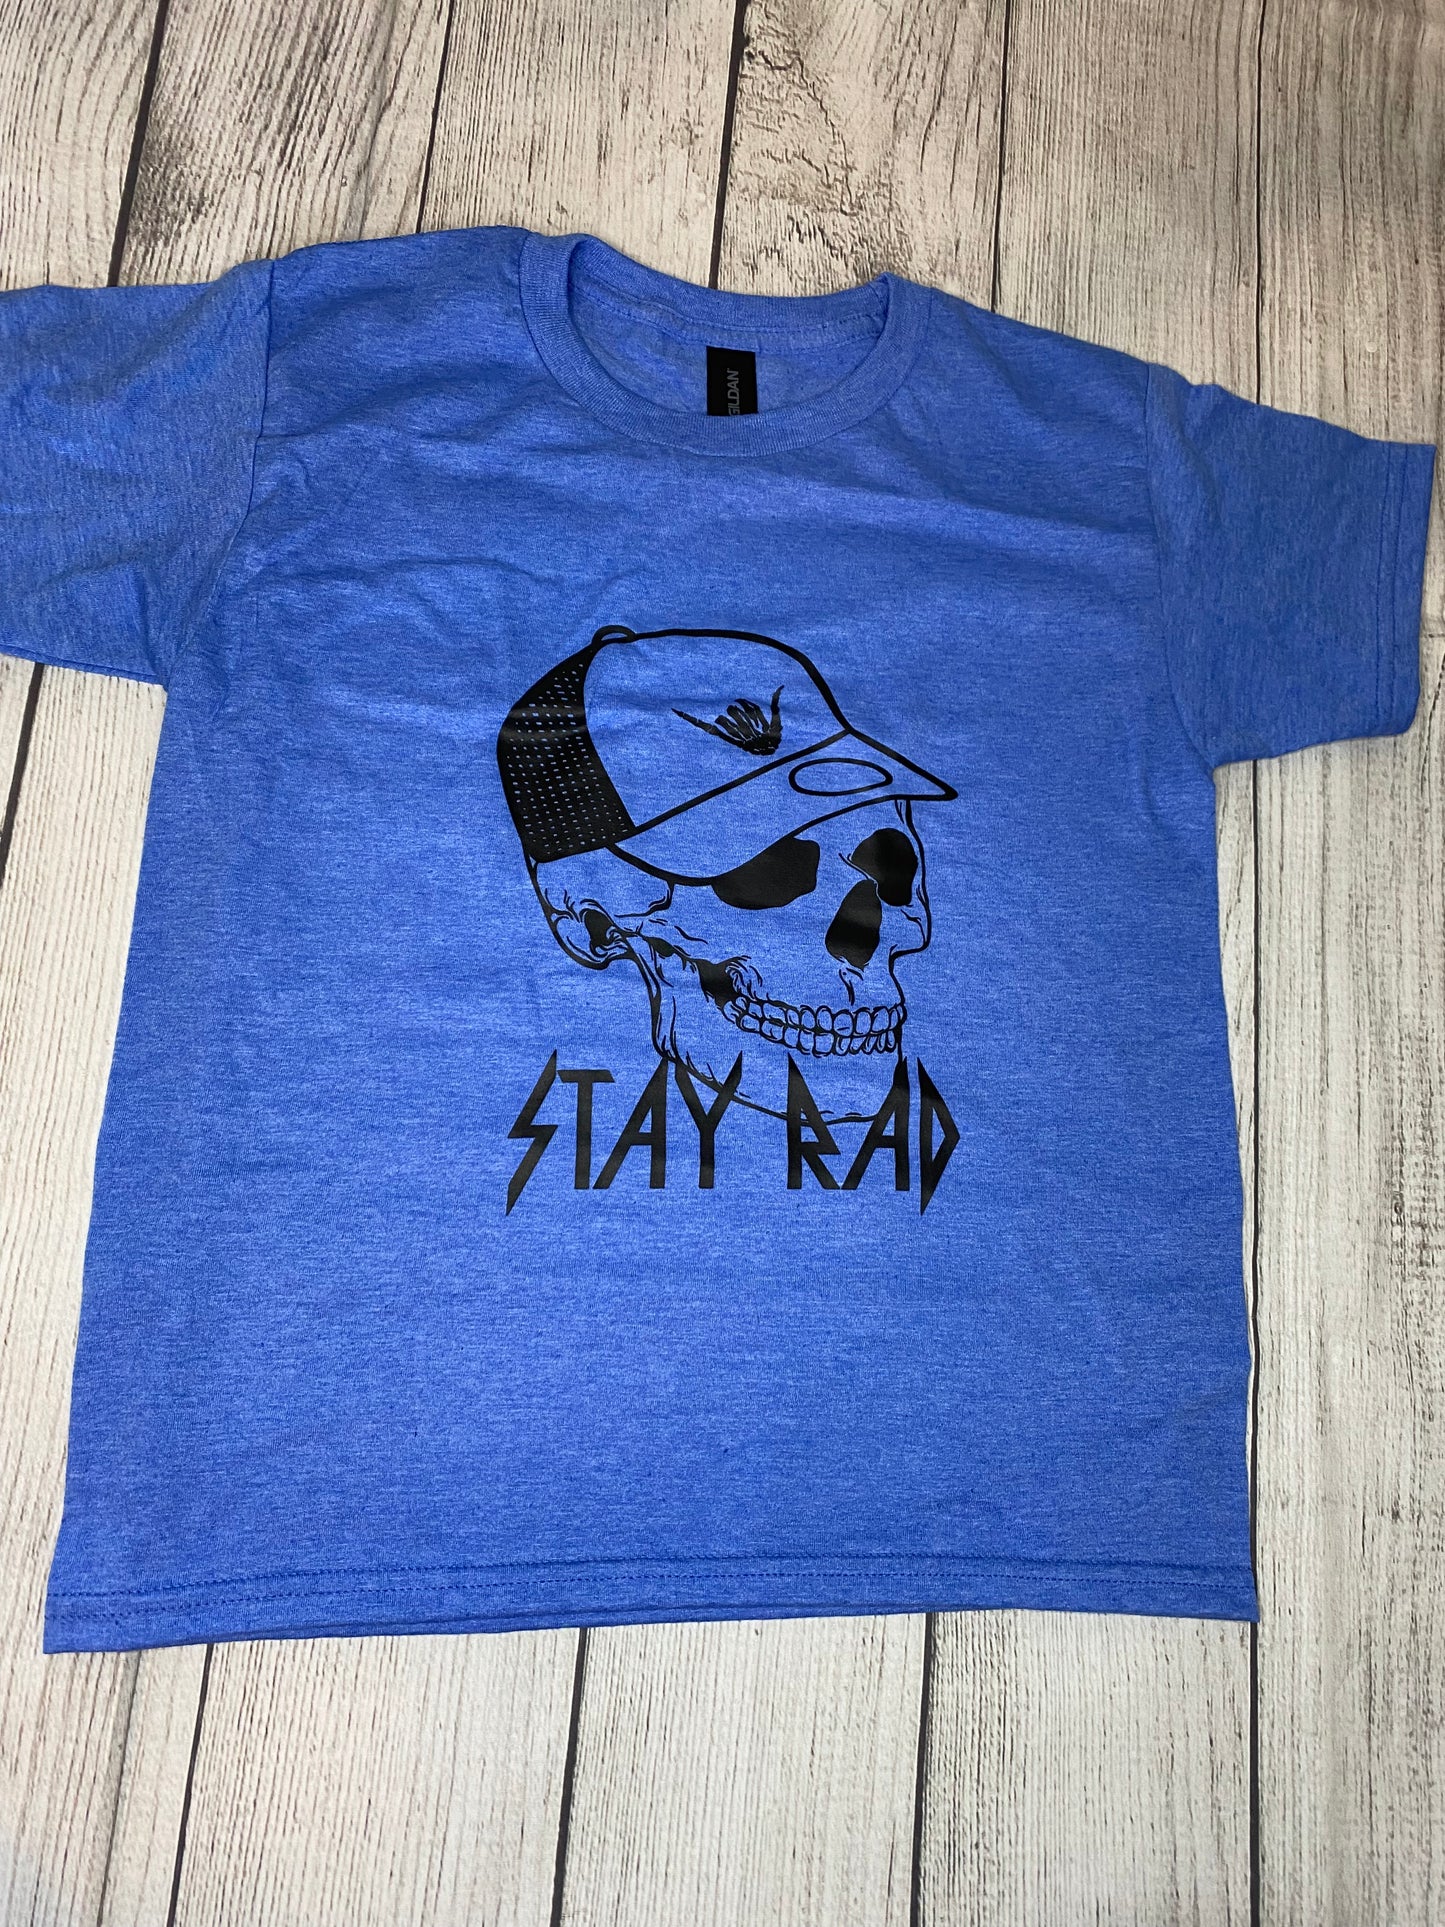 Youth - Stay Rad Tshirt